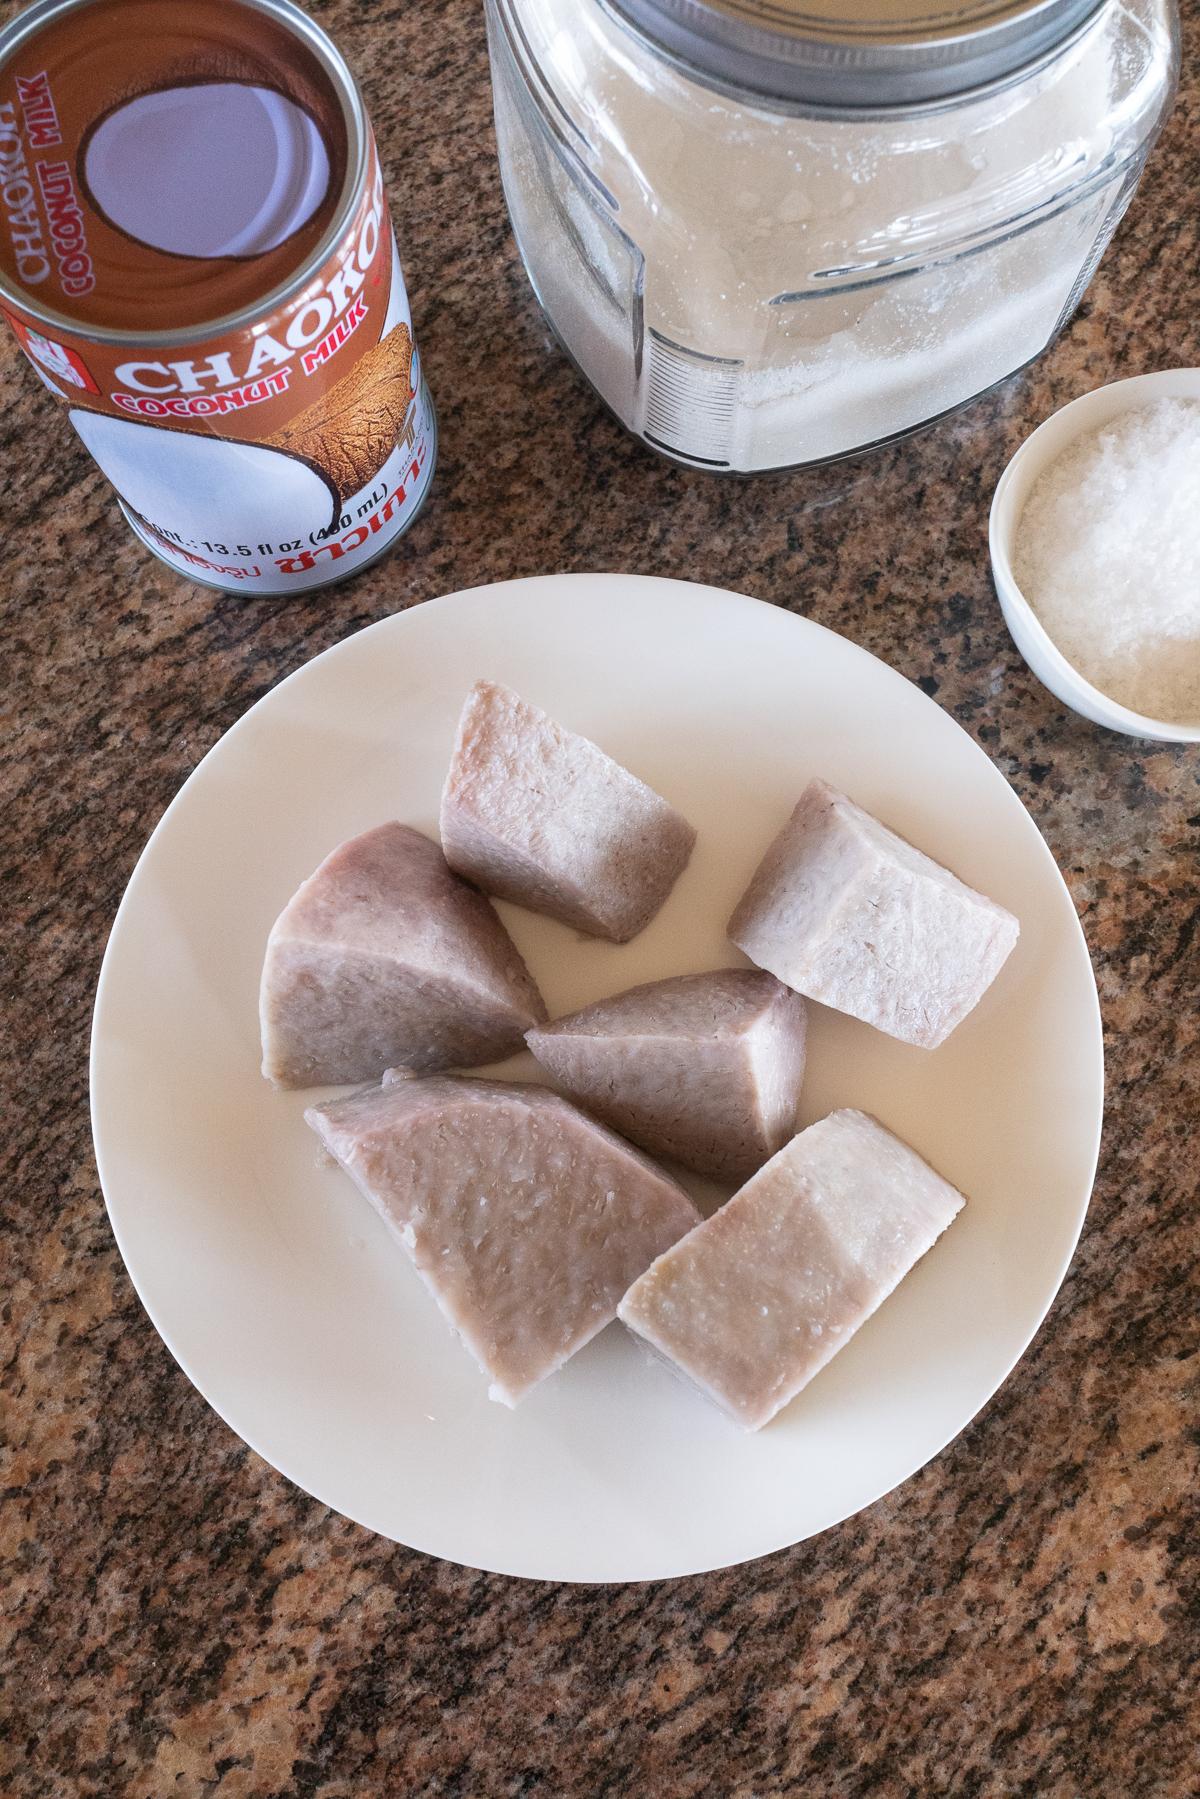 Ingredients for Taro with Coconut Milk: par-cooked taro, coconut milk, sugar, and salt